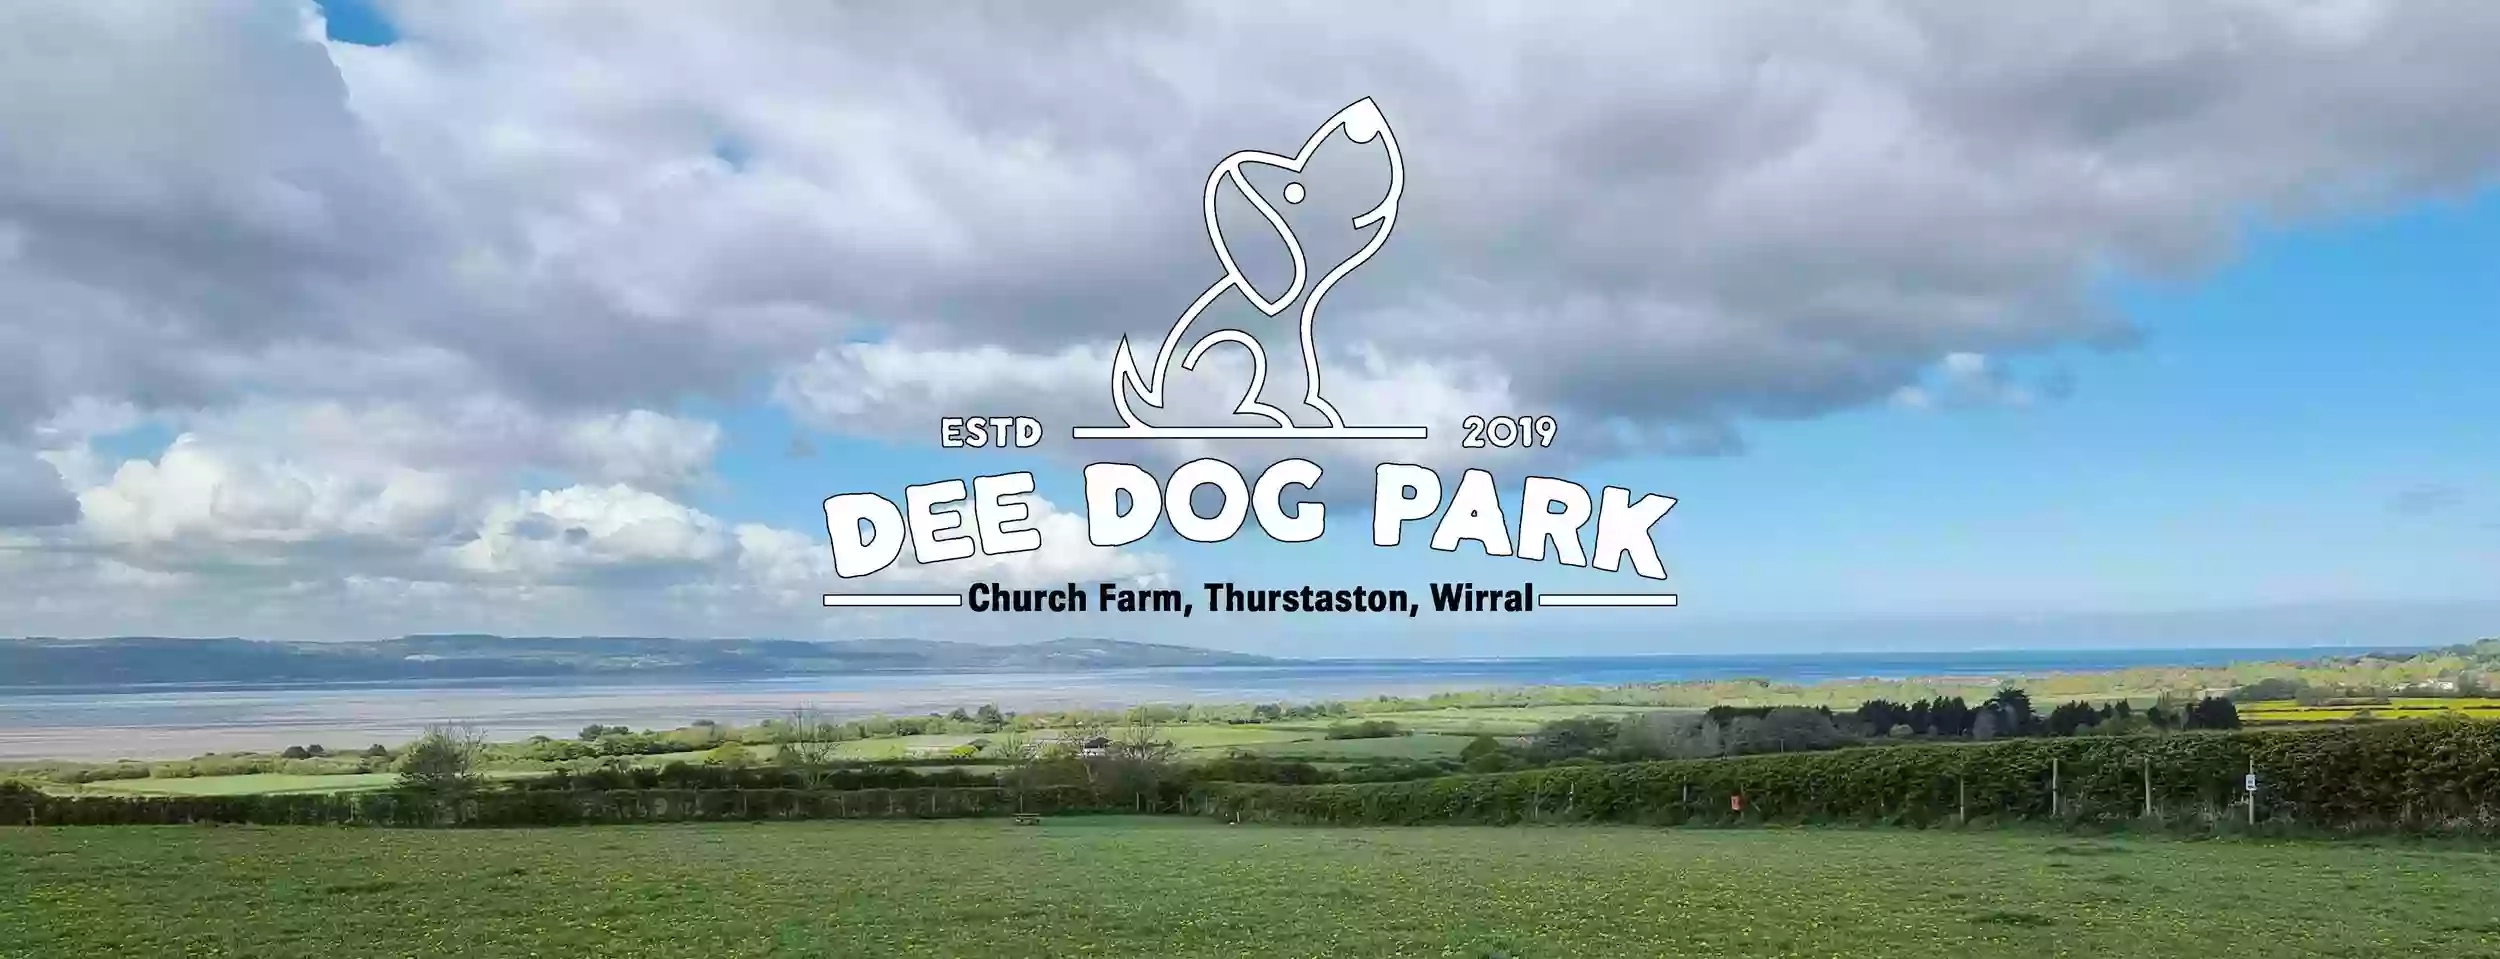 Dee Dog Park at Church Farm